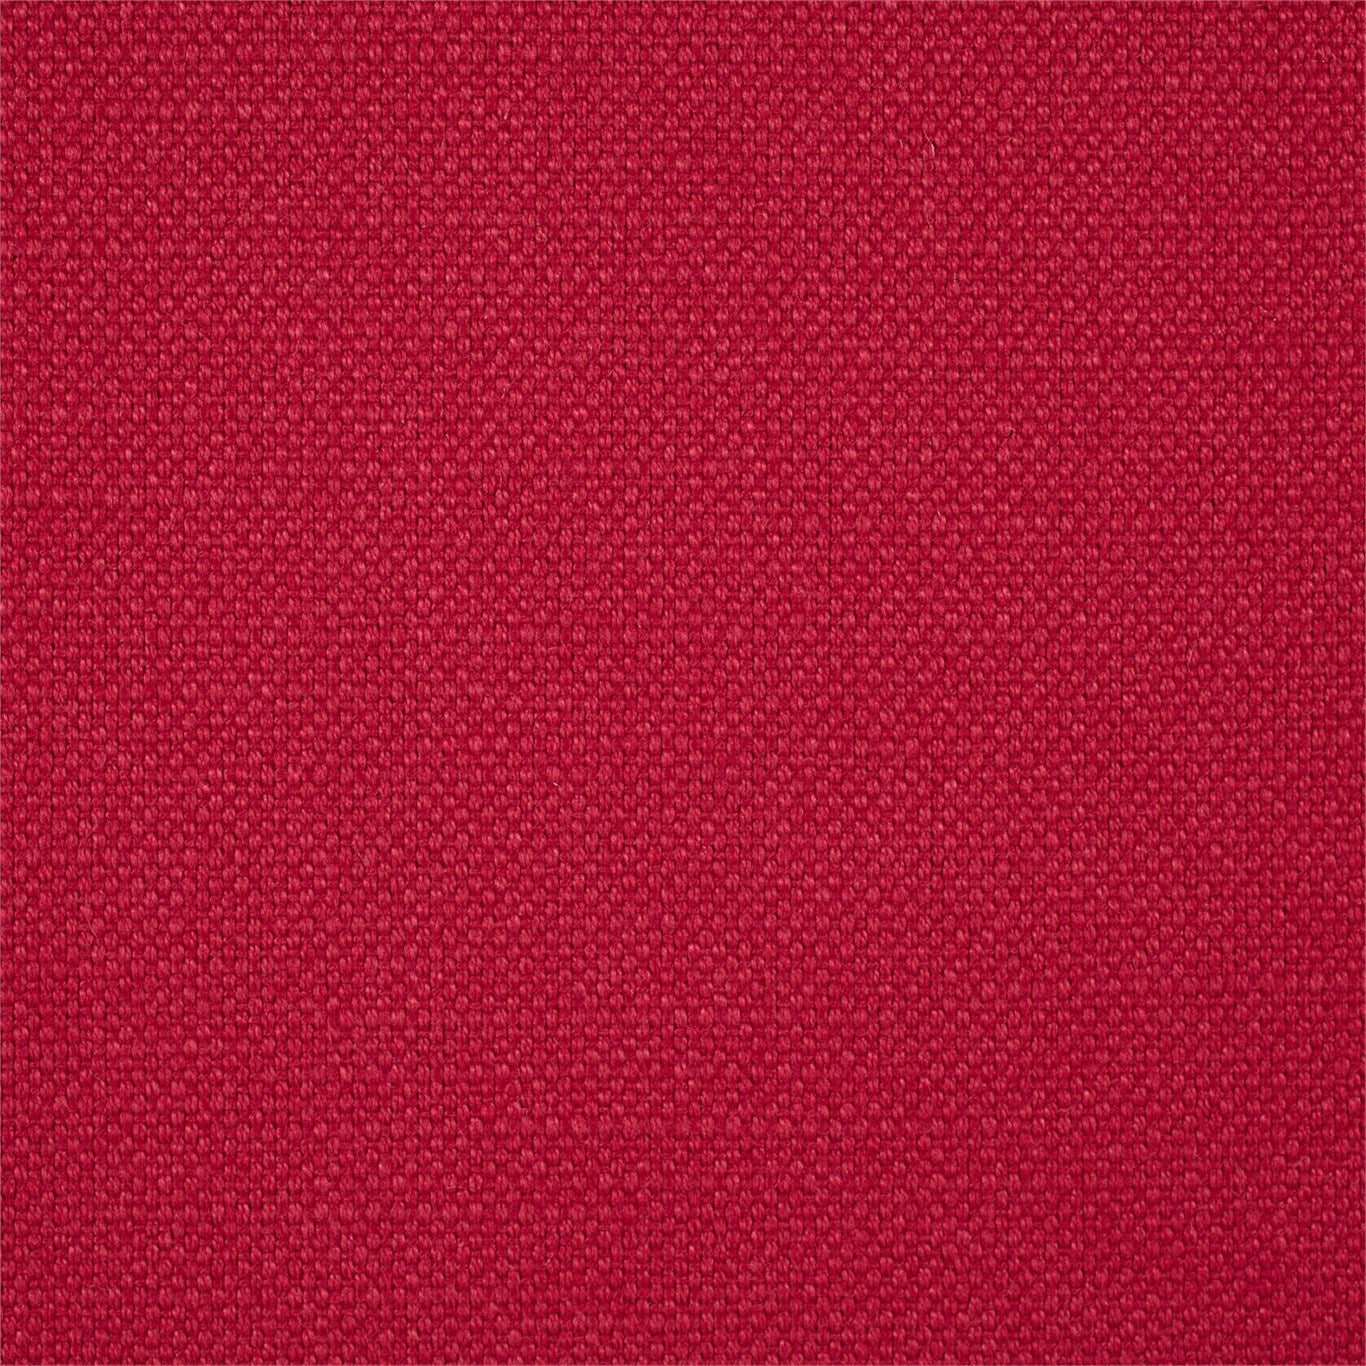 Arley Fabric by Sanderson - DALY245819 - Cerise